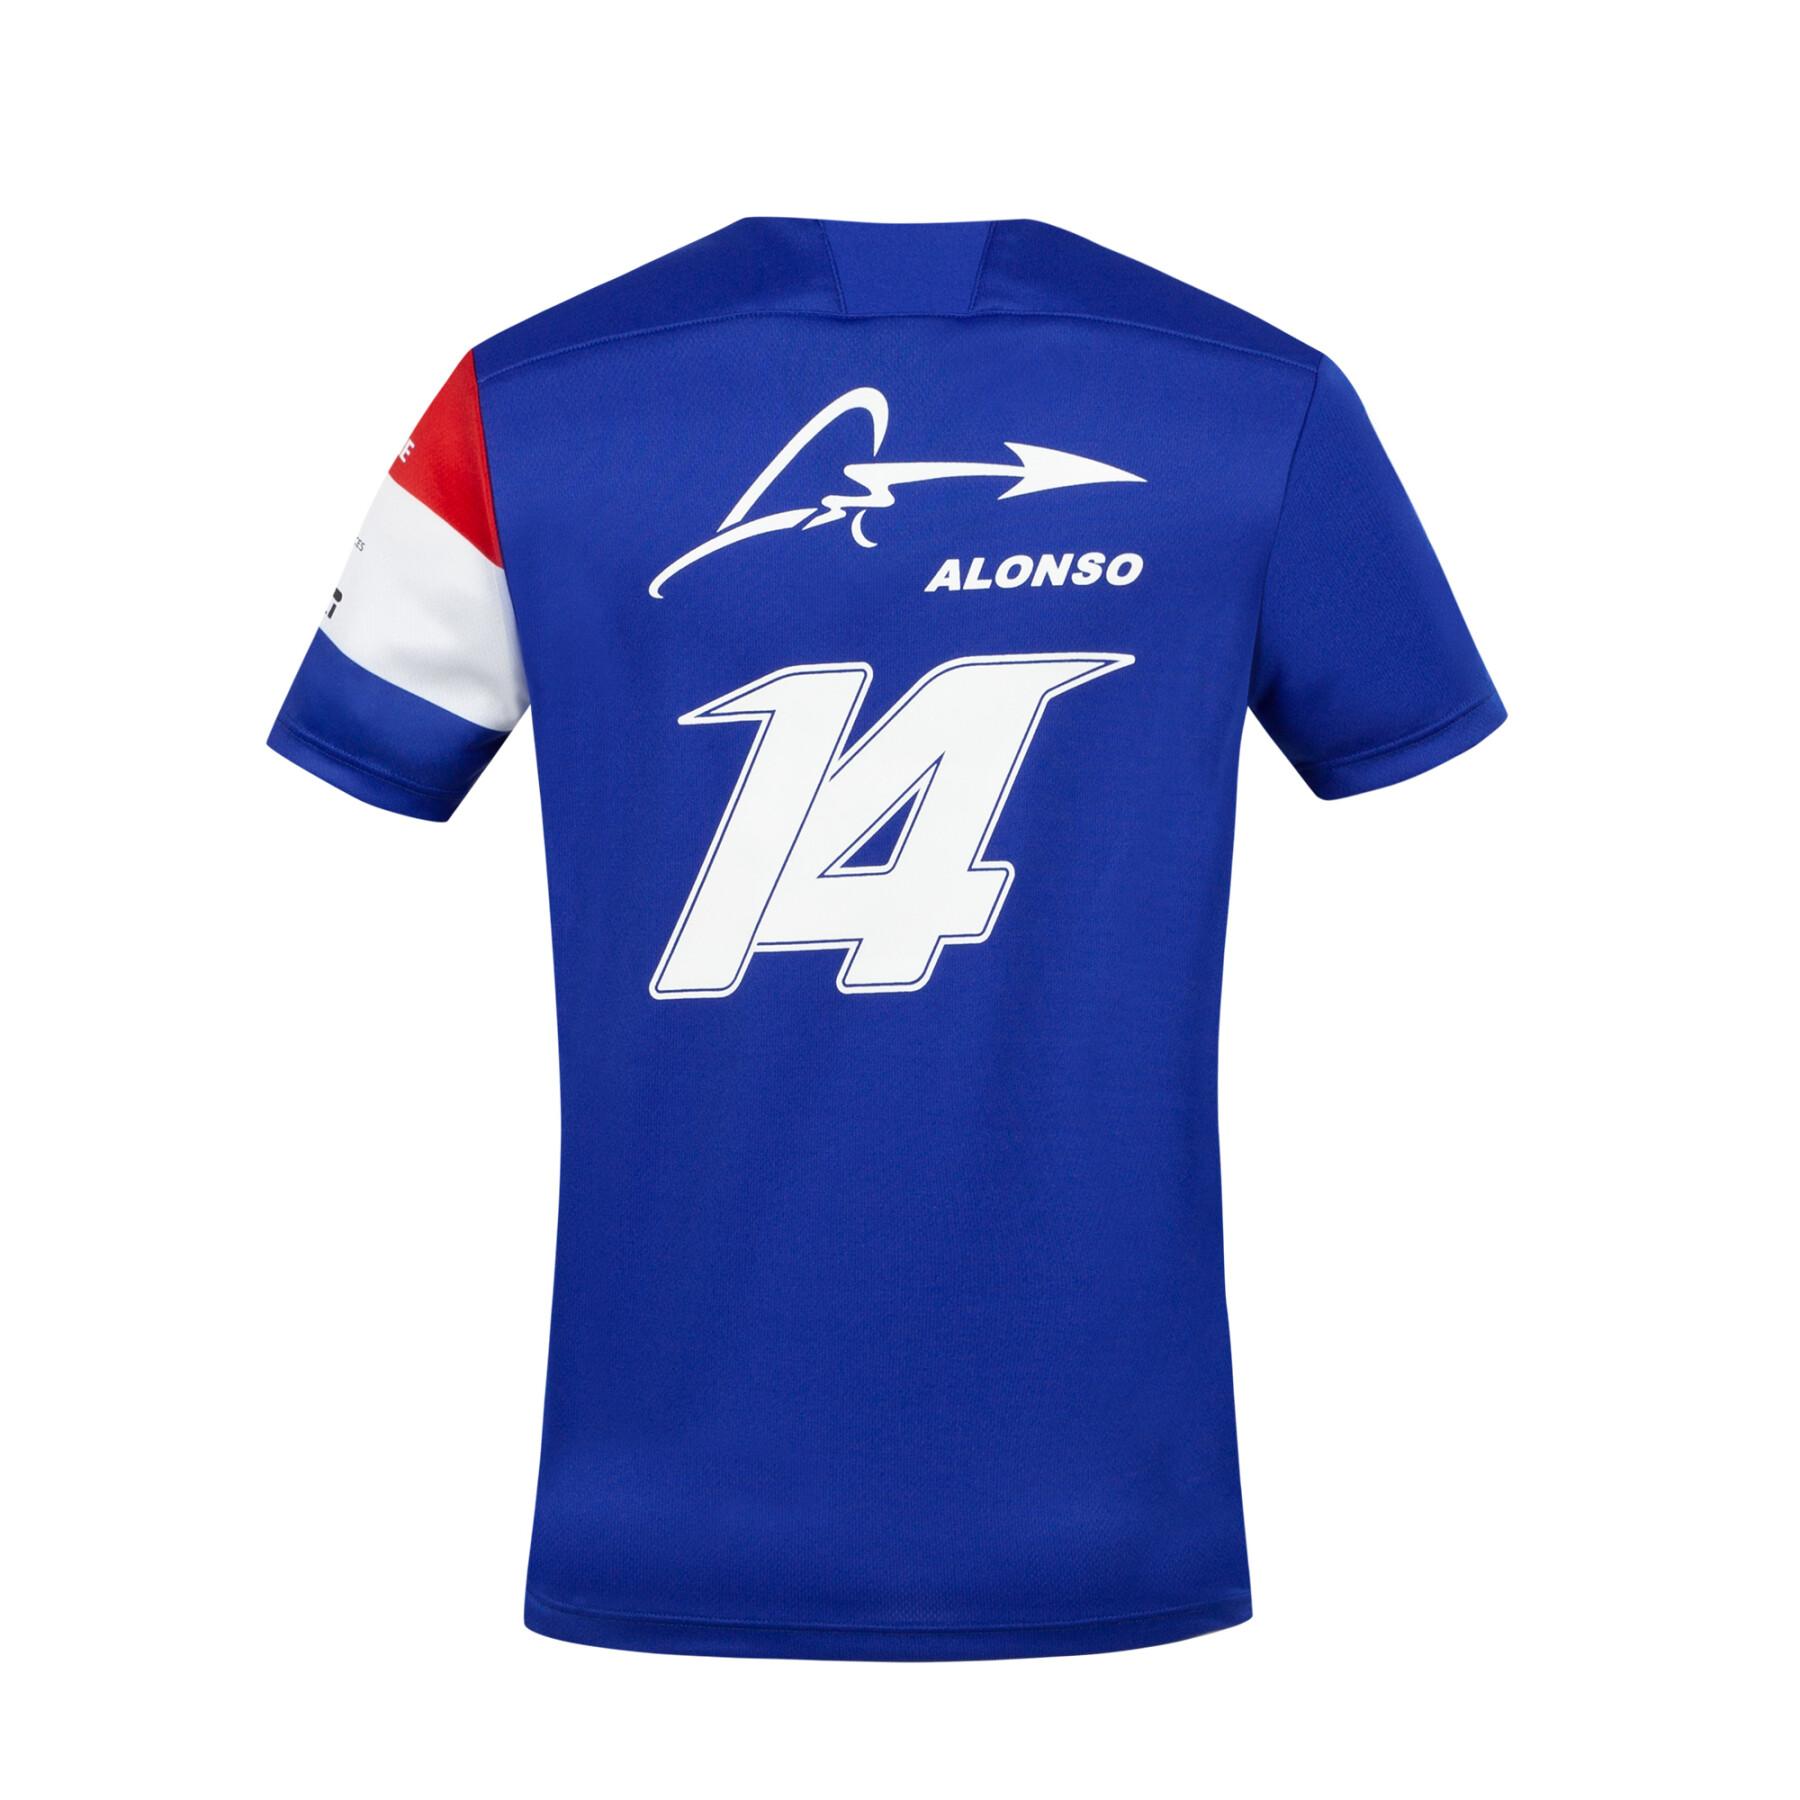 Camiseta niños Le Coq Sportif Alpine F1 2021/22